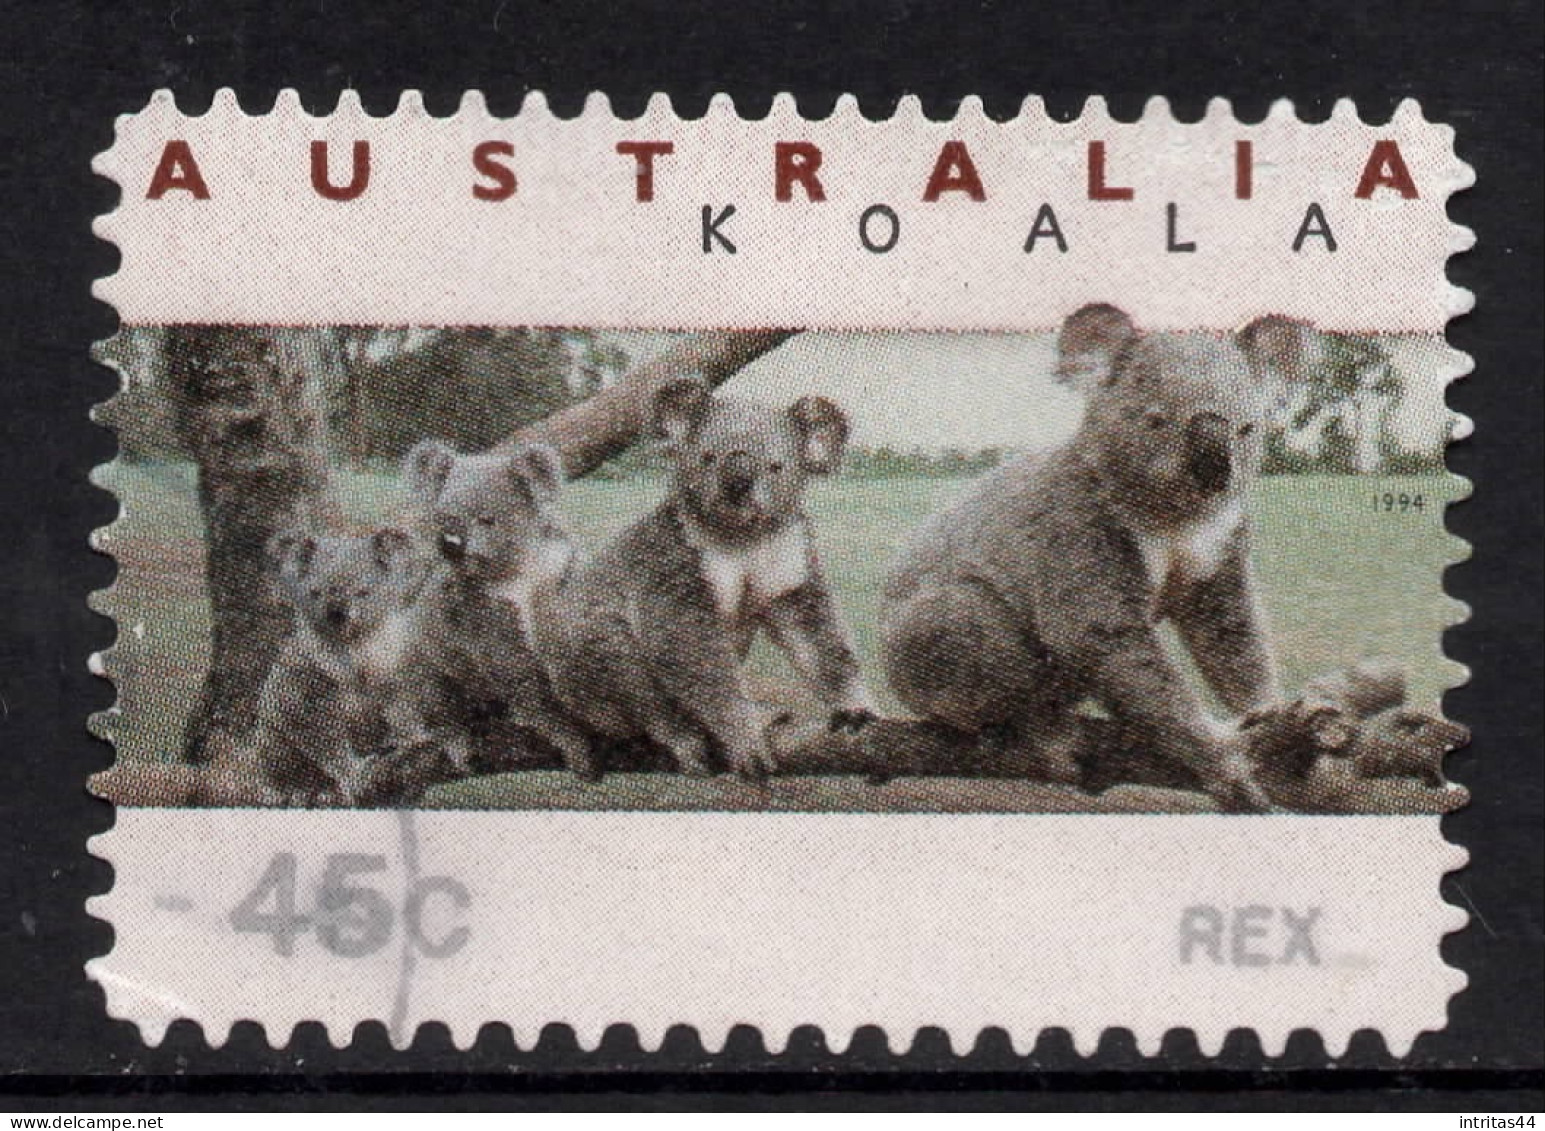 AUSTRALIA 1994 KOALA AND KANGAROO (COUNTER PRINTED) "45c KOALA FAMILY" STAMP VFU - Gebruikt